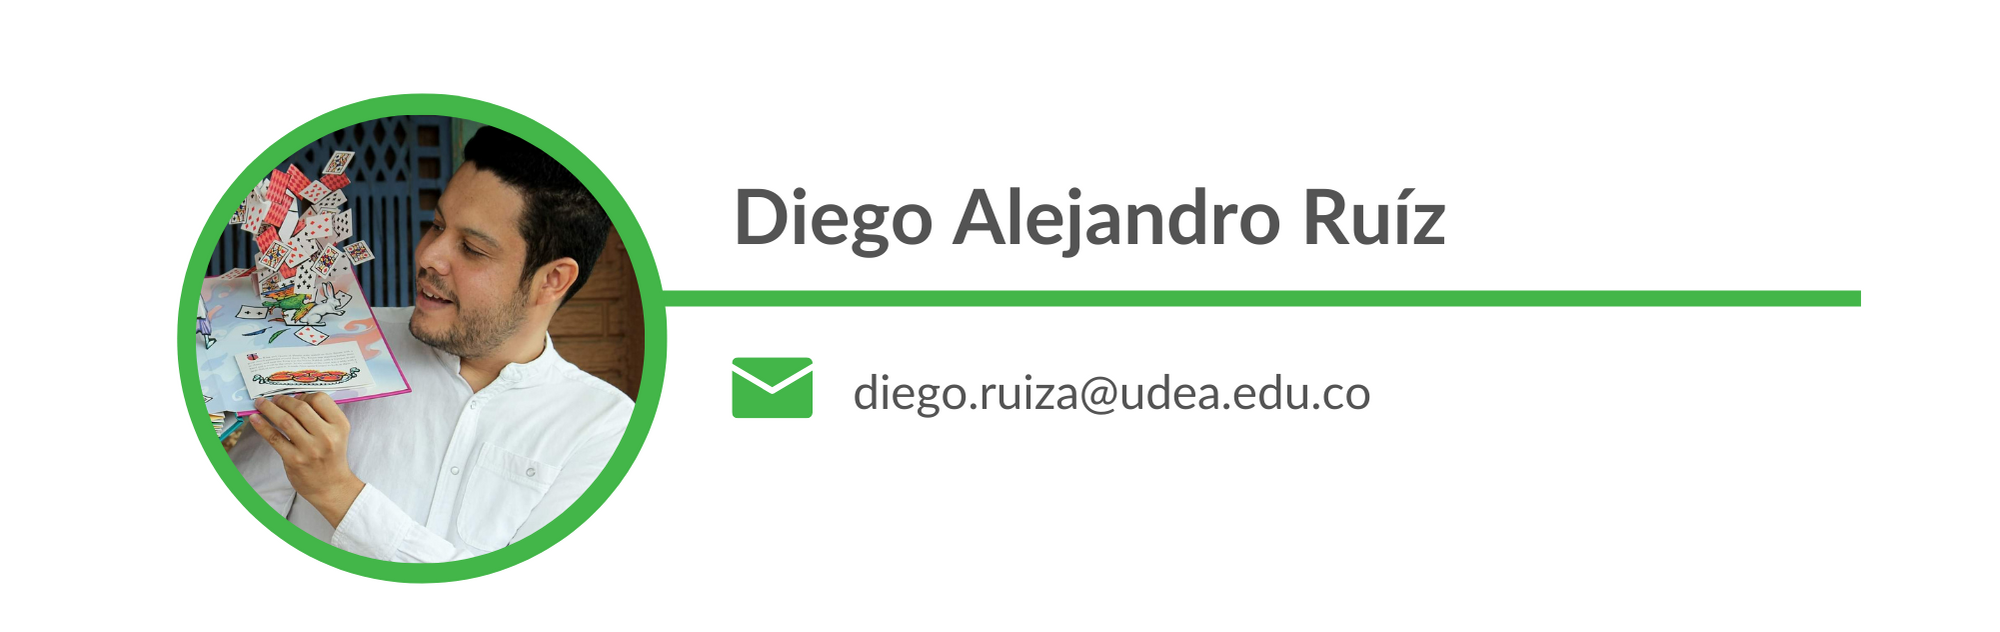 Diego Alejandro Ruíz  Email: diego.ruiza@udea.edu.co